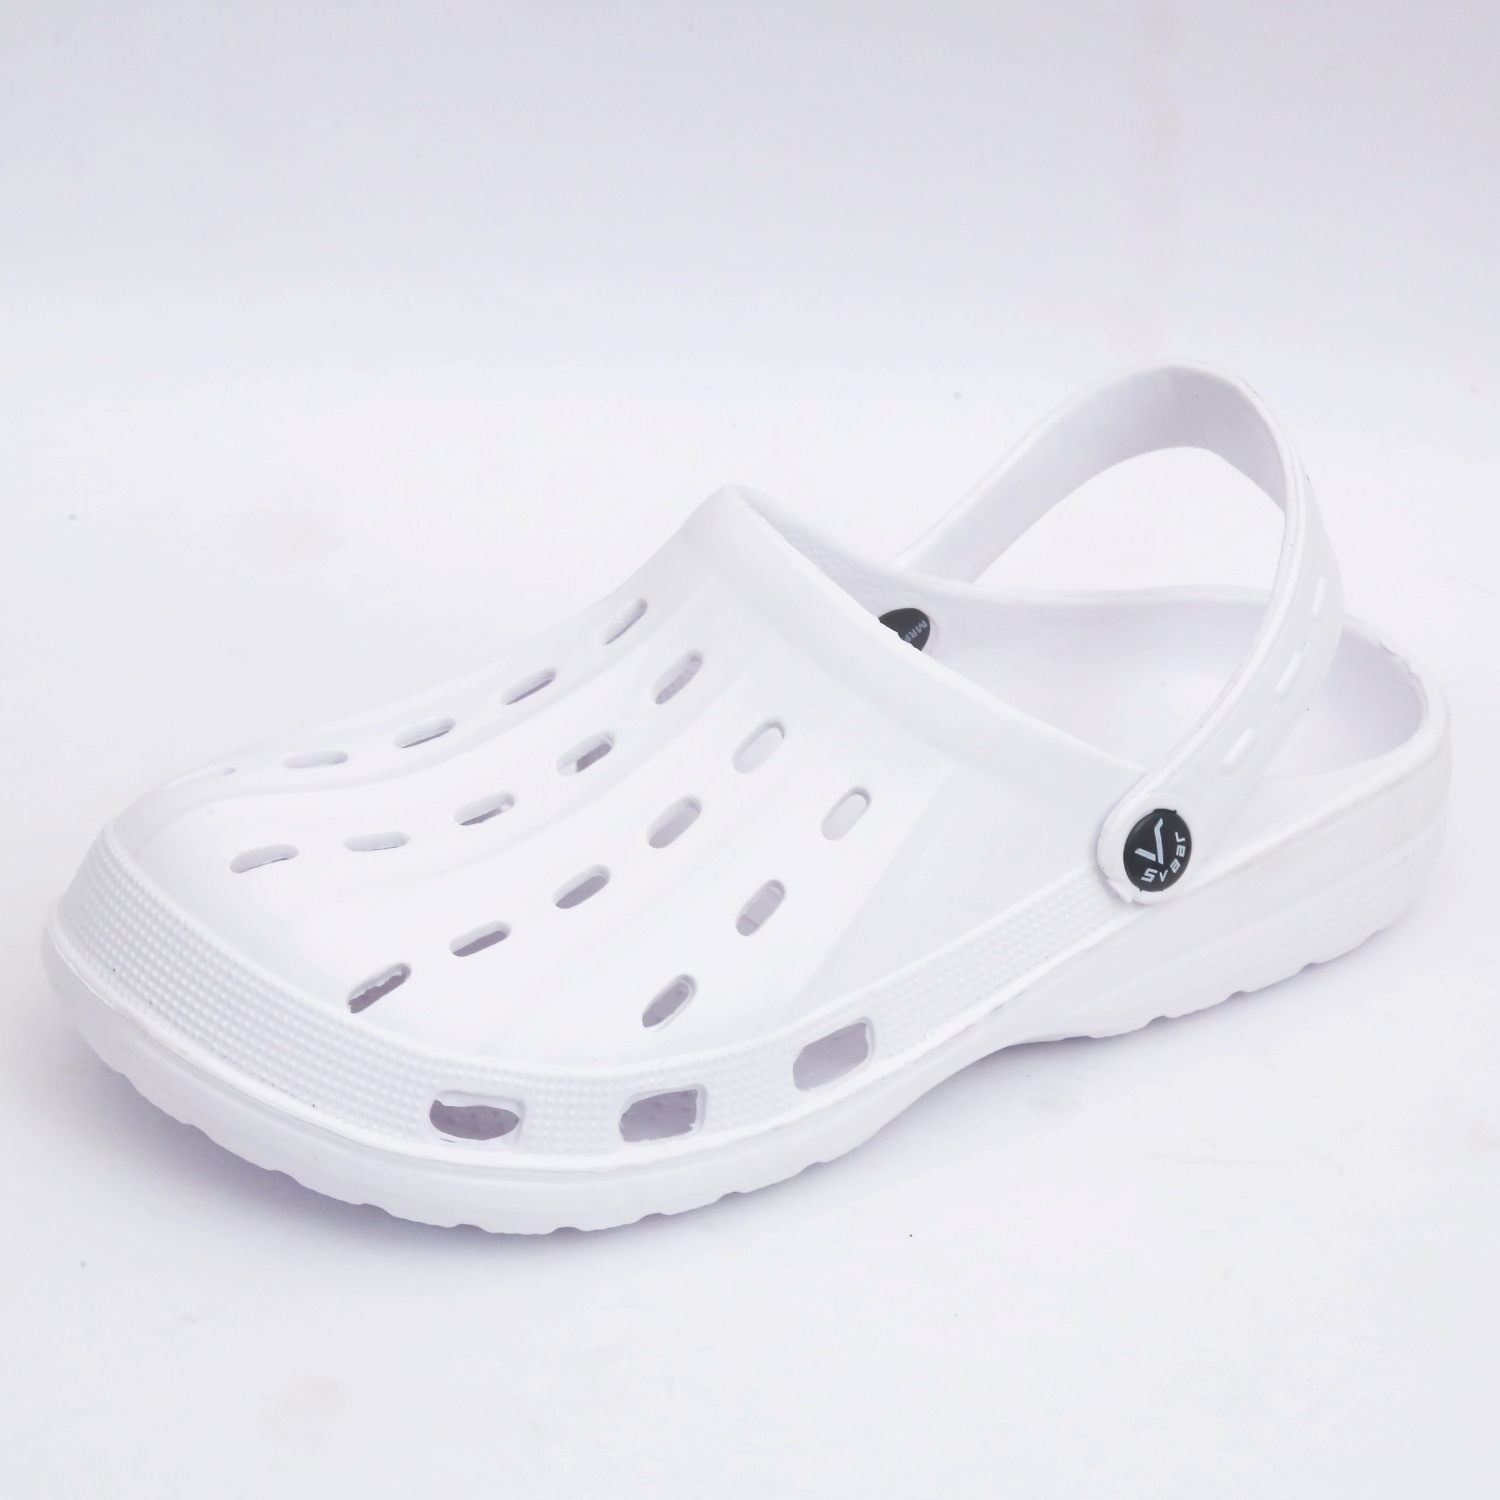 Buy Svaar Light Weight White Crocs Online @ ₹389 from ShopClues